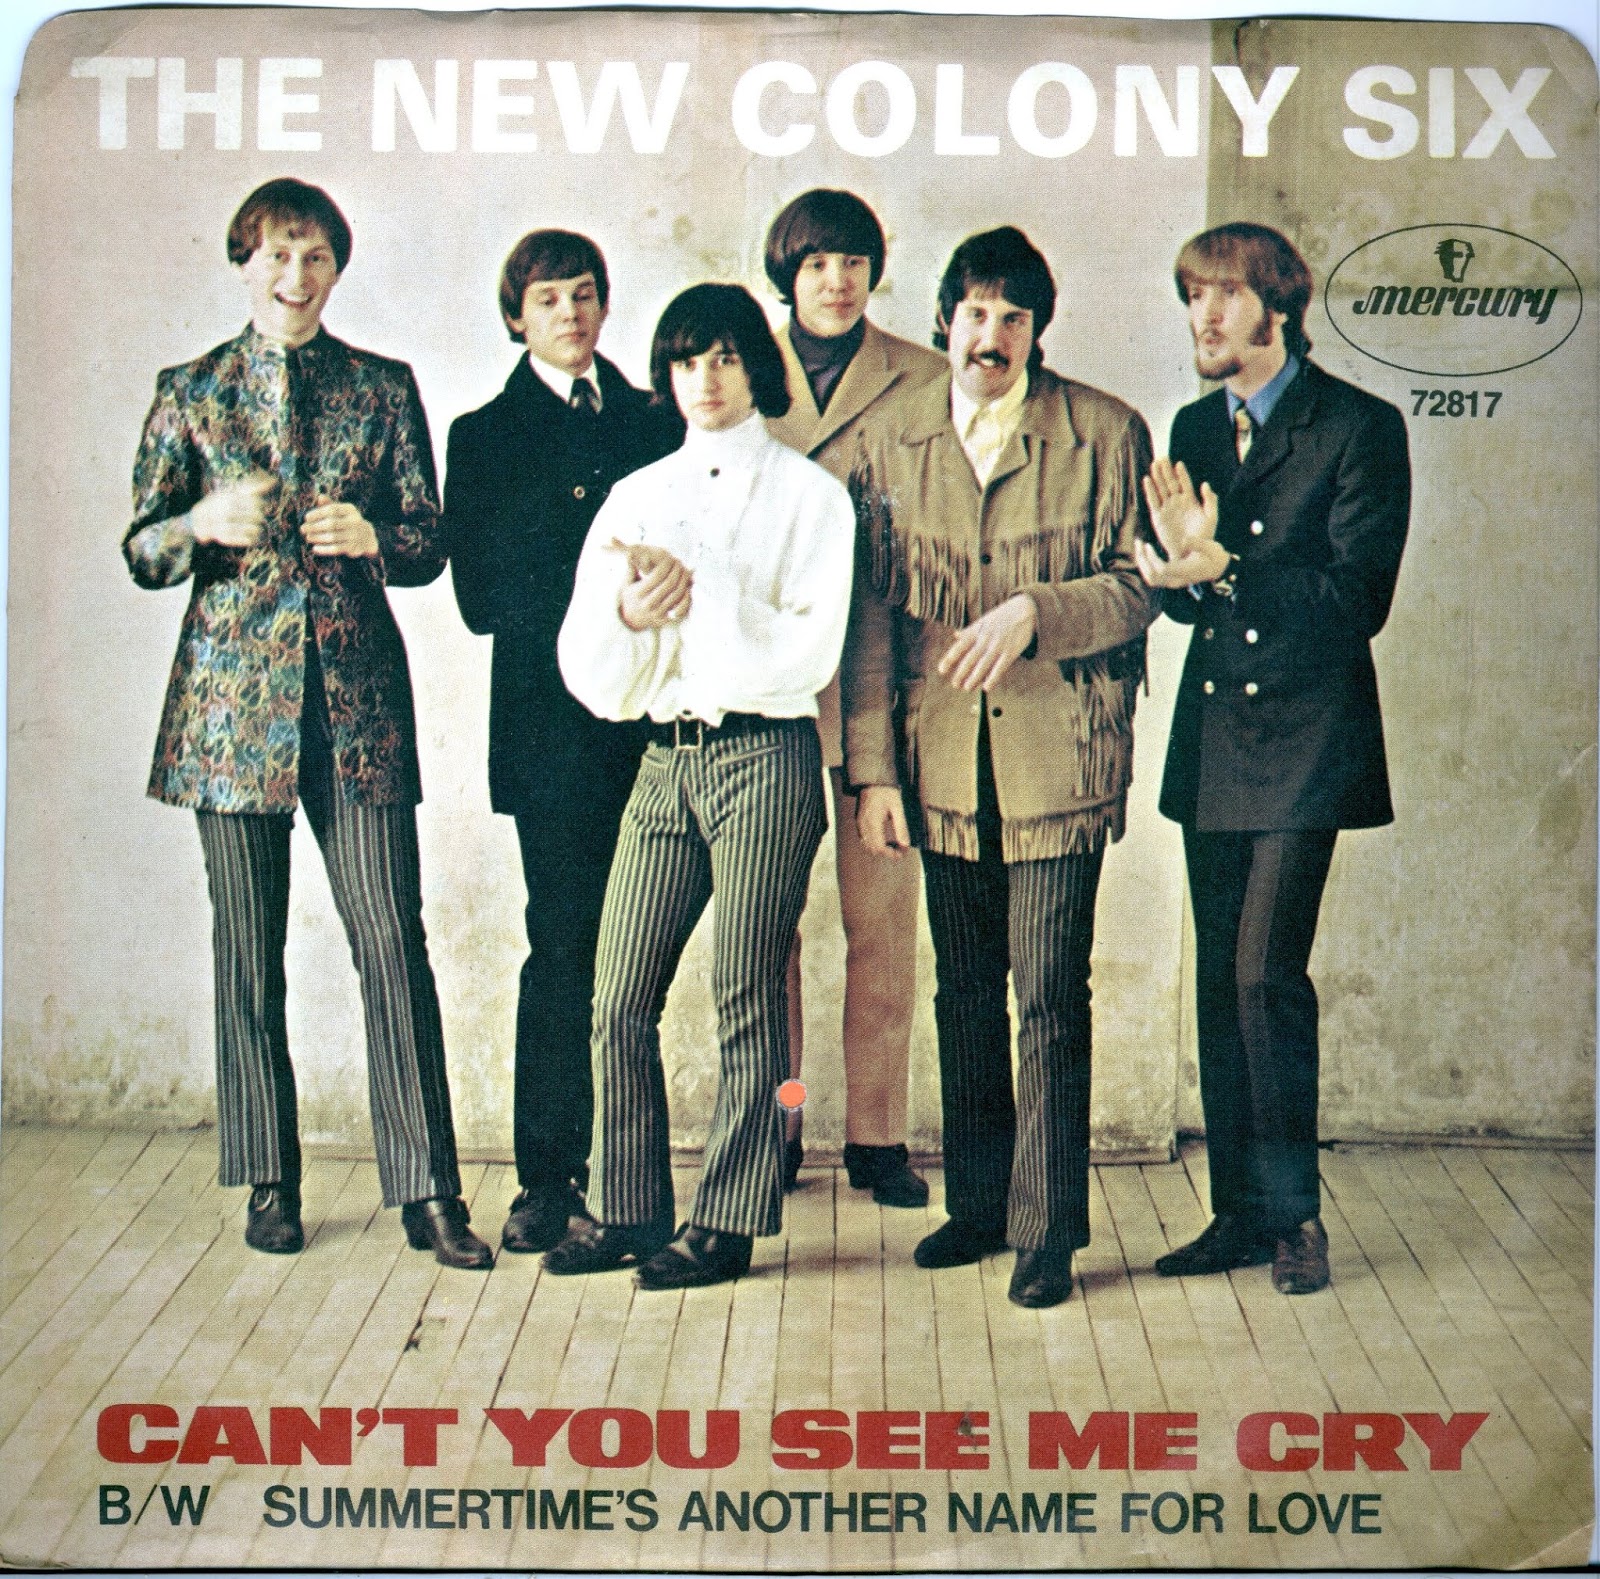 The new six группа. The New Colony Six. New Colony Six Band. The Six группа 1977. Six cannot.